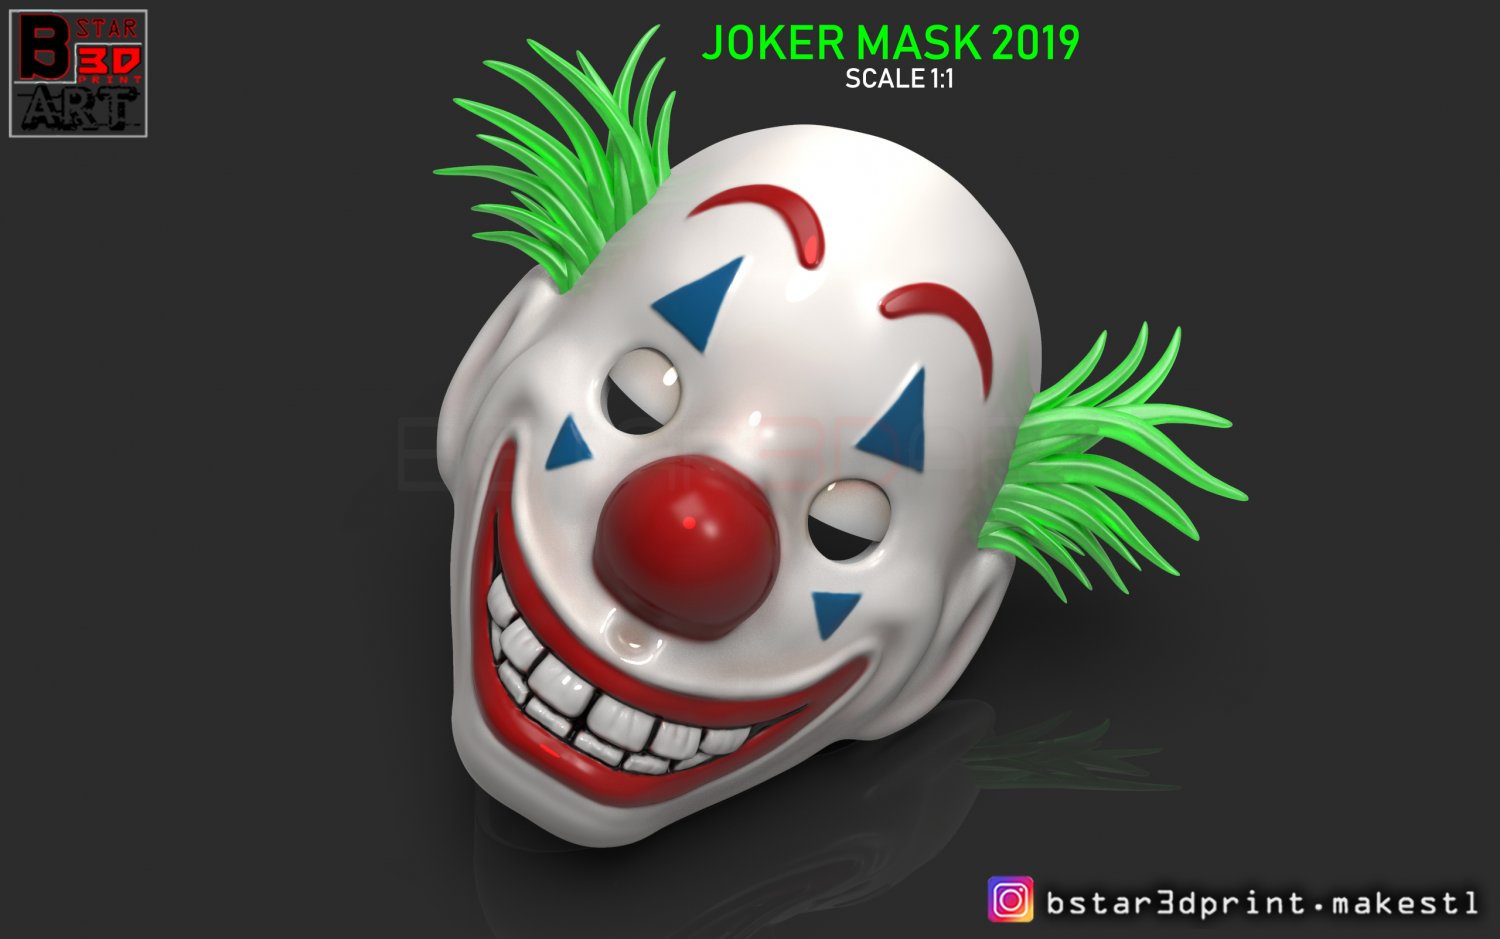 joker mask 2019 with hair - clown mask 2019 - halloween mask from ...